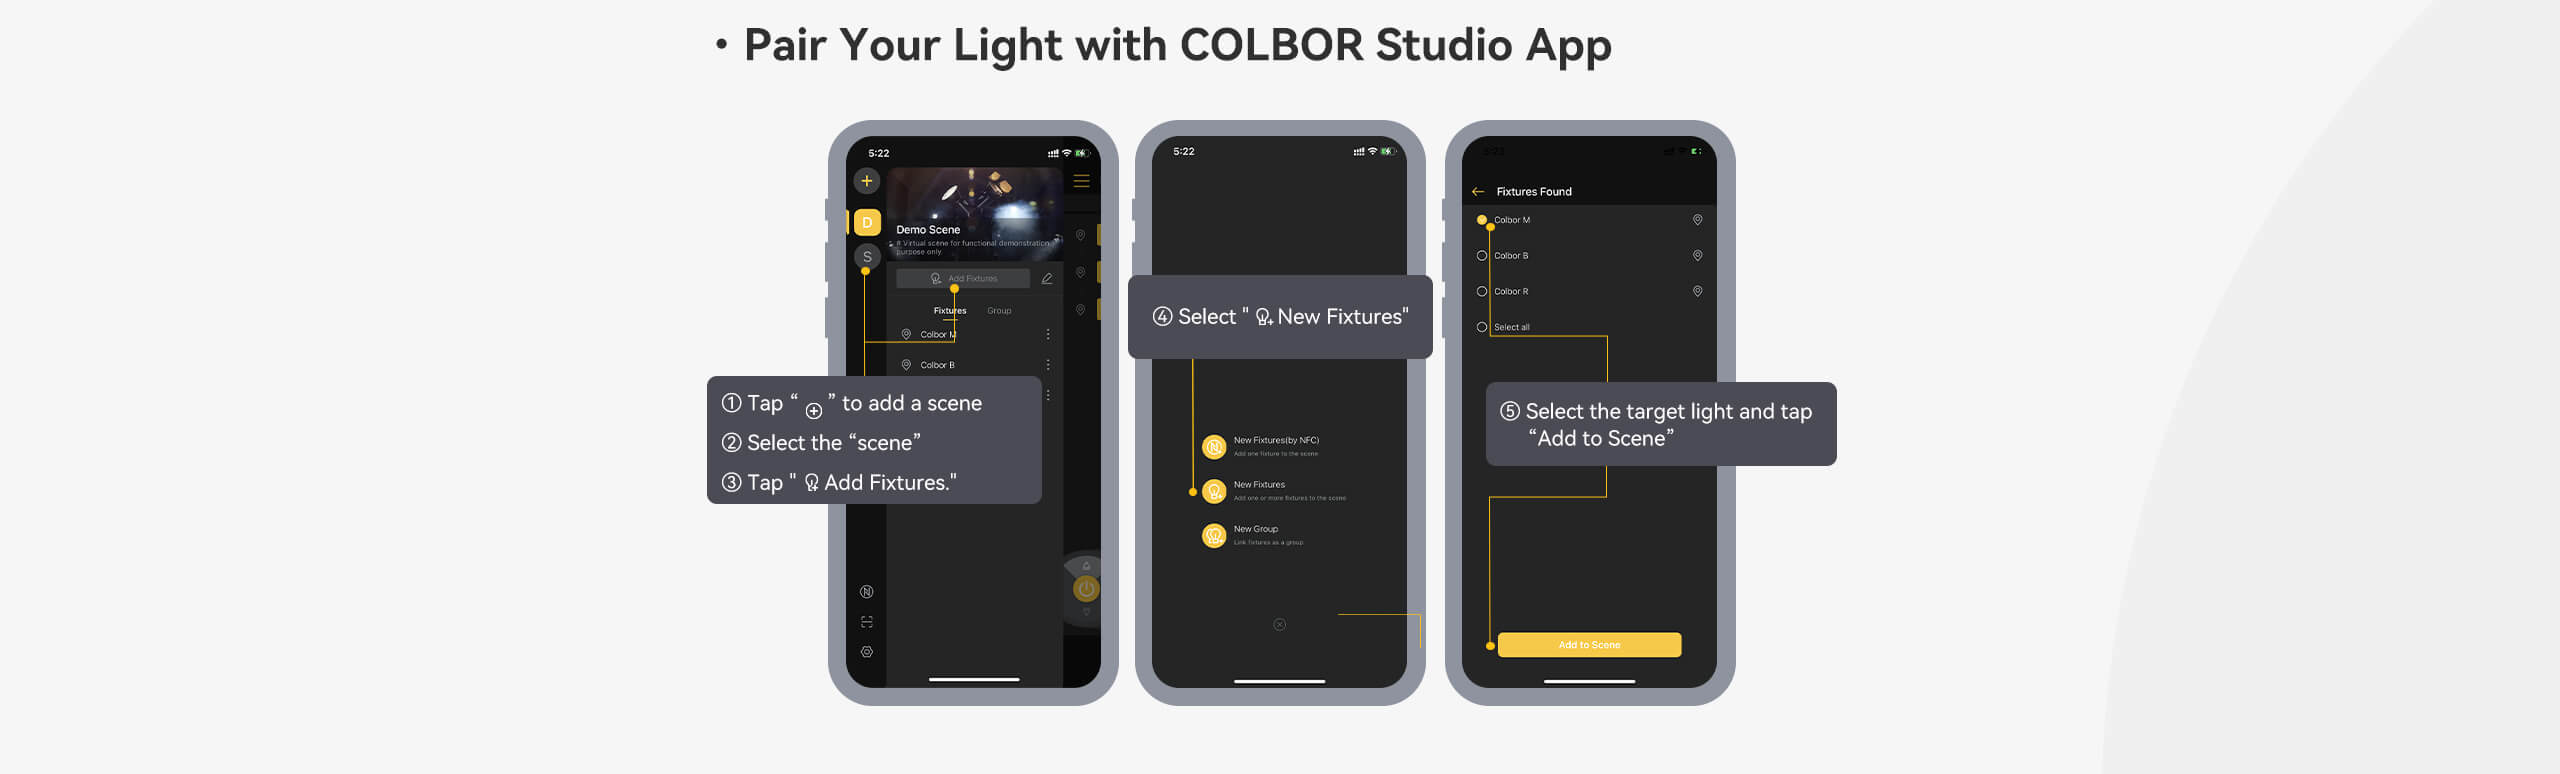 Moman & COLBOR Light App Pairing